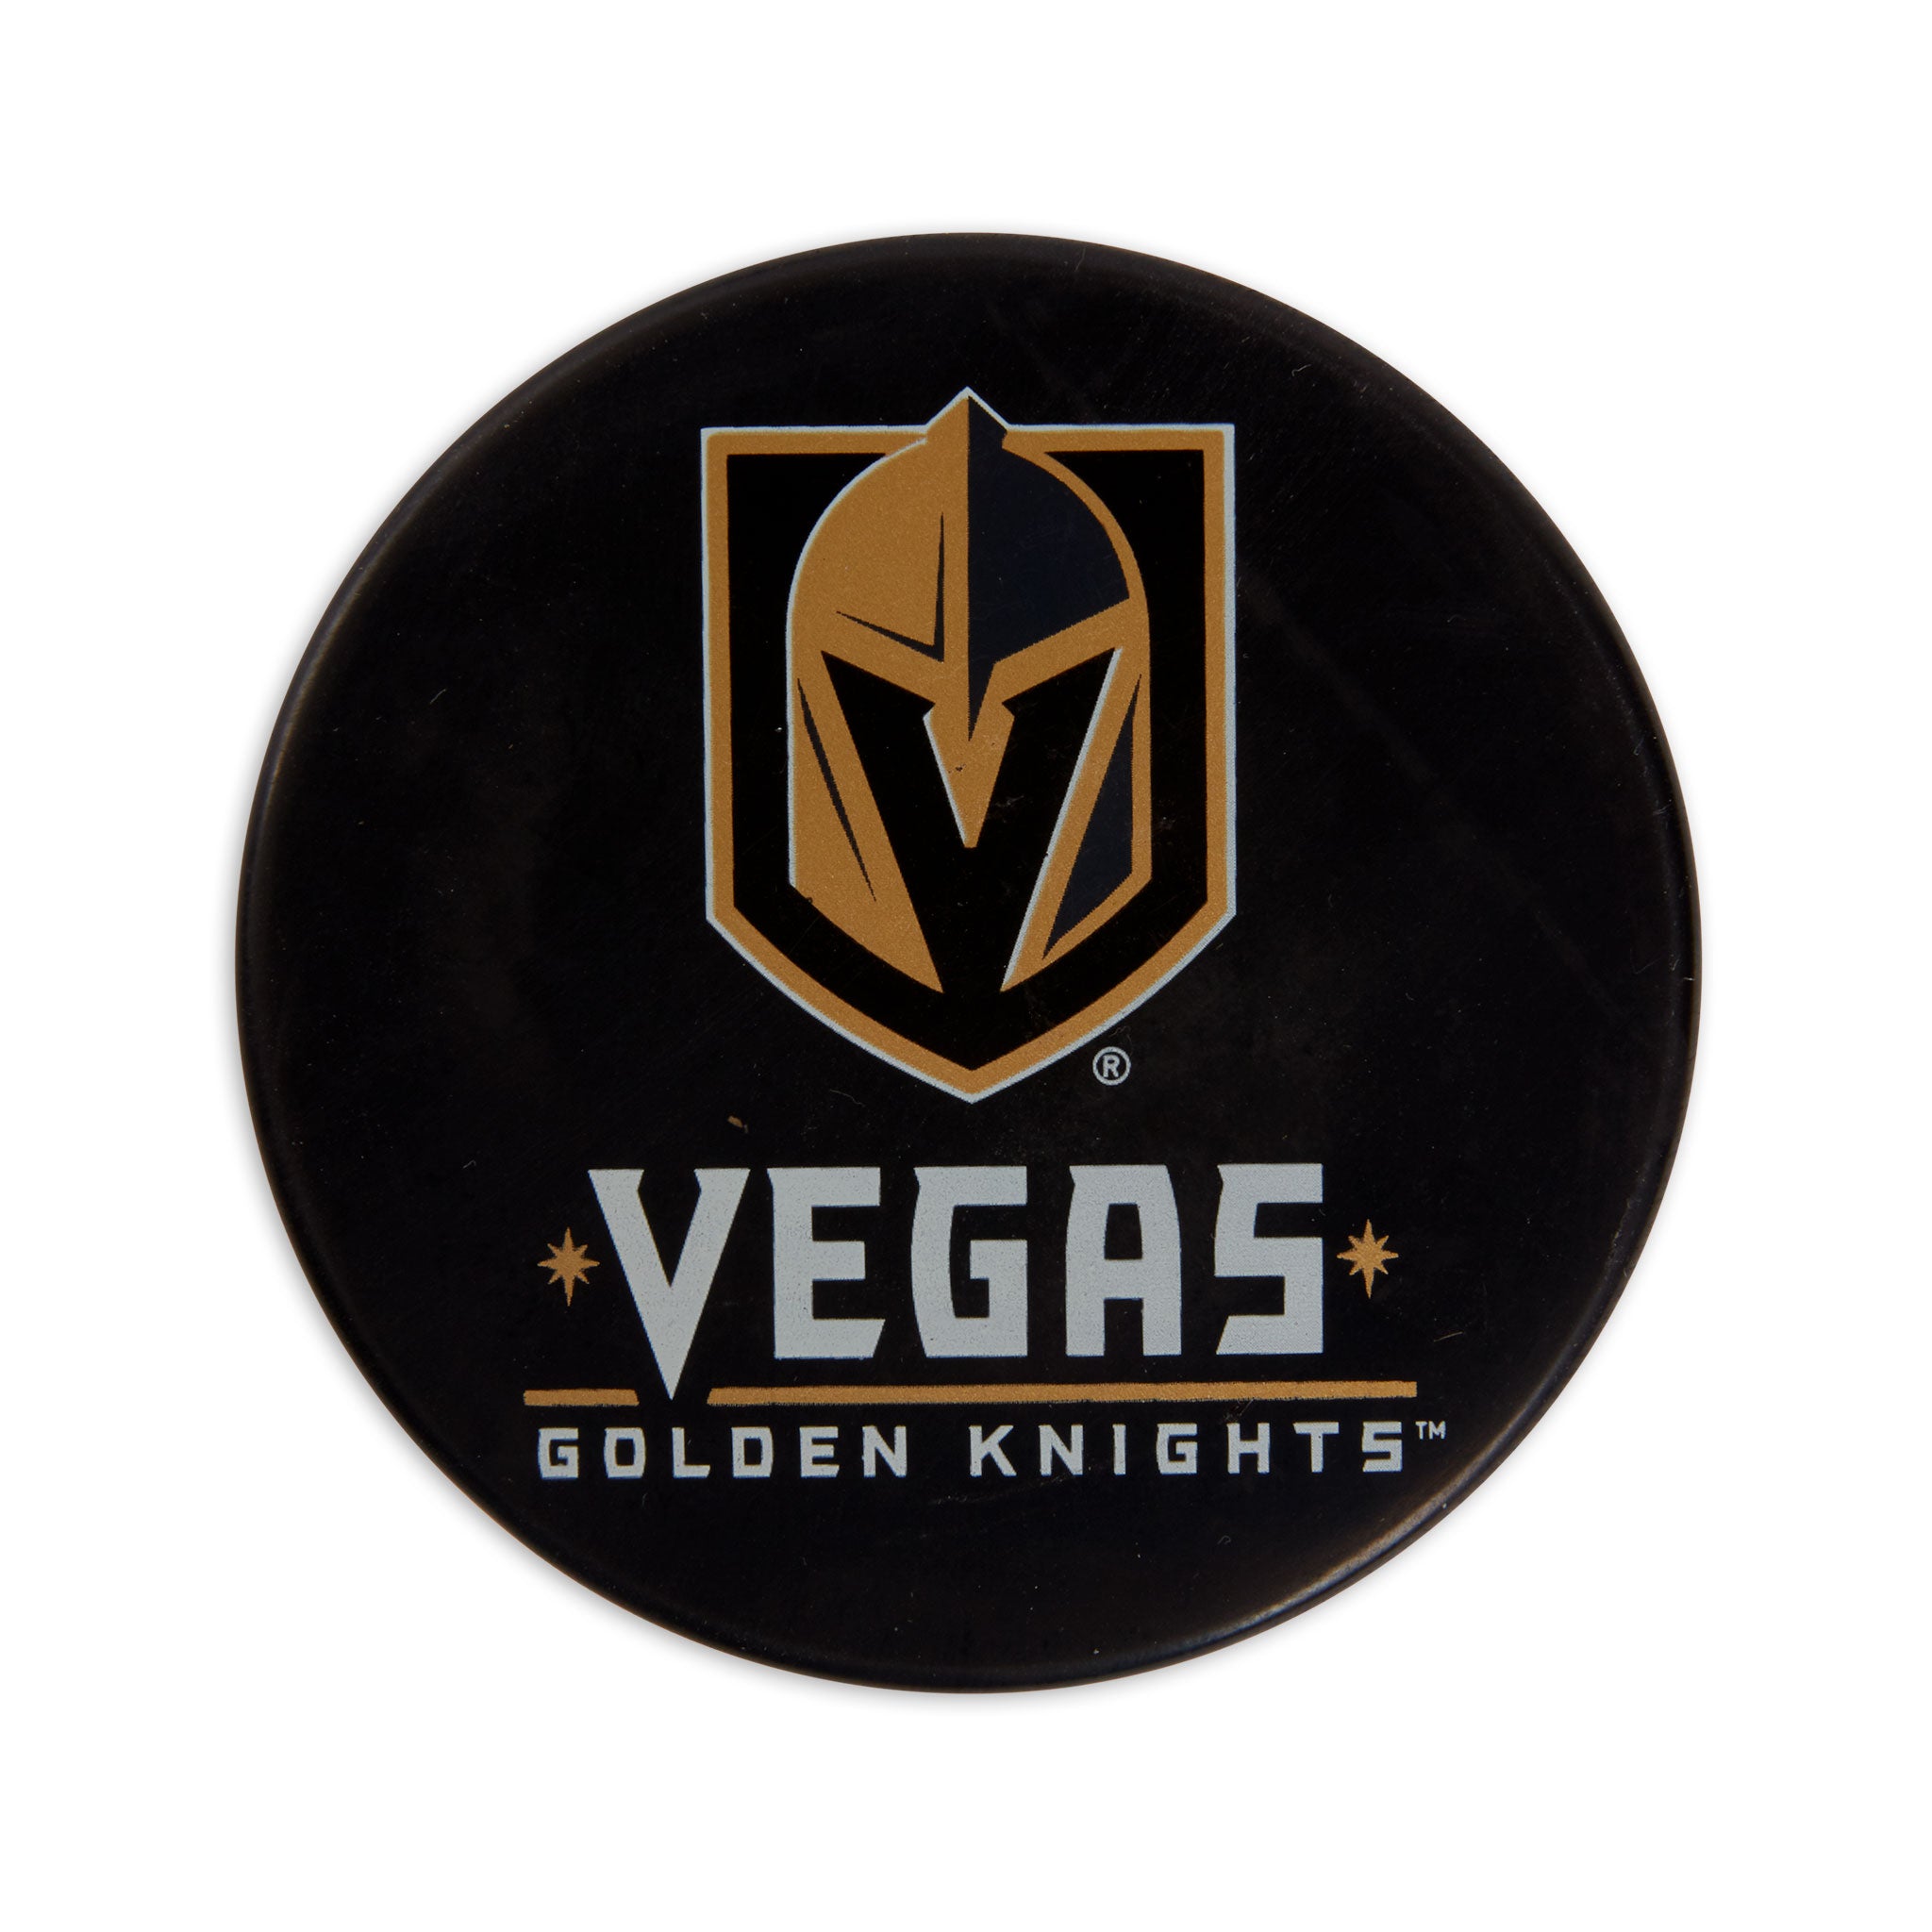 Vegas Golden Knights reveal metallic gold third jersey for the